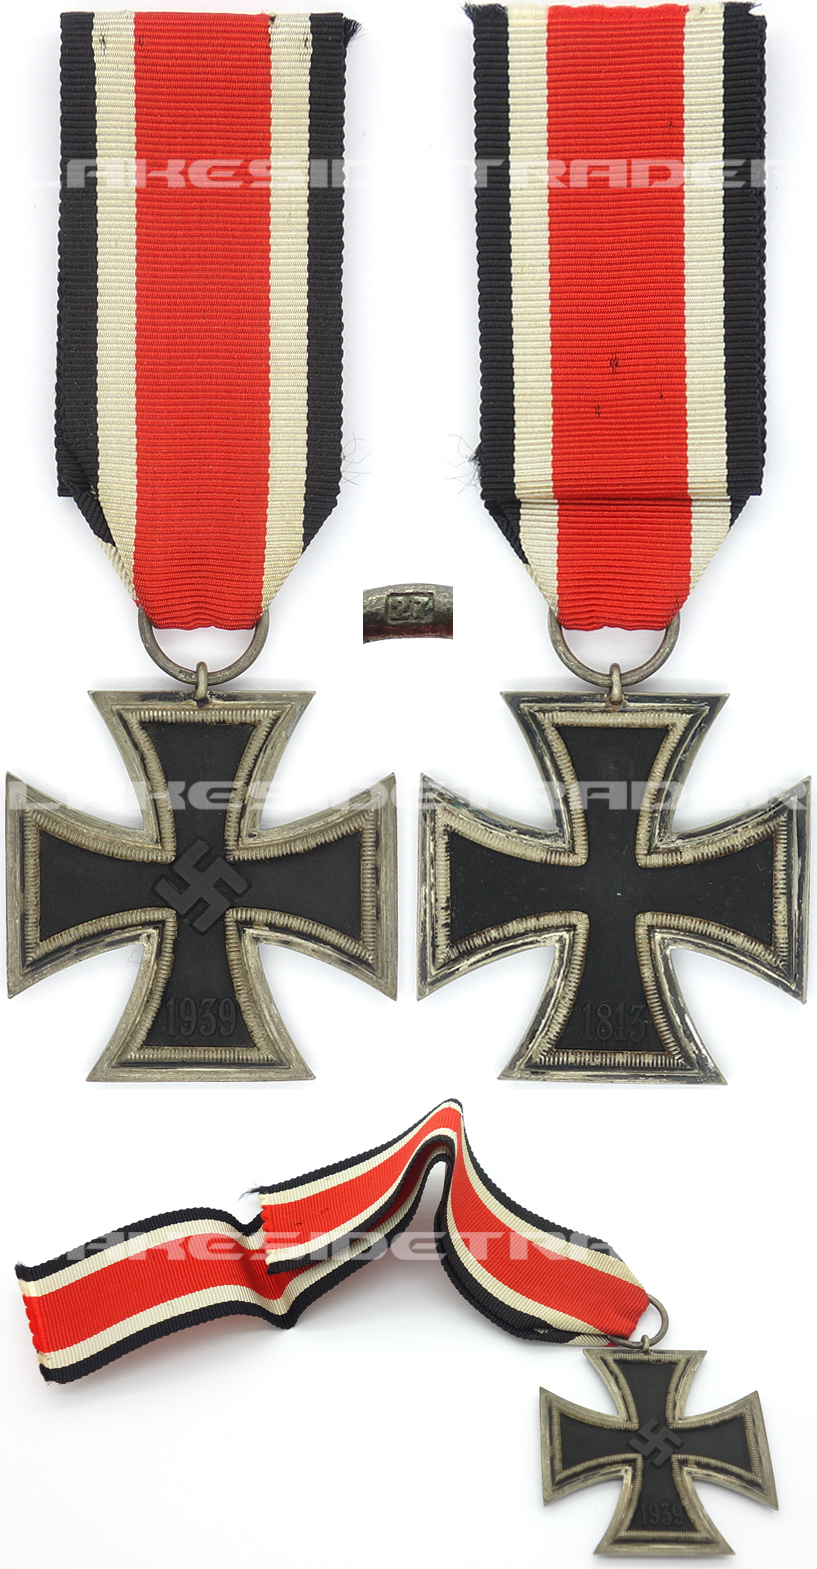 2nd Class Iron Cross by 27